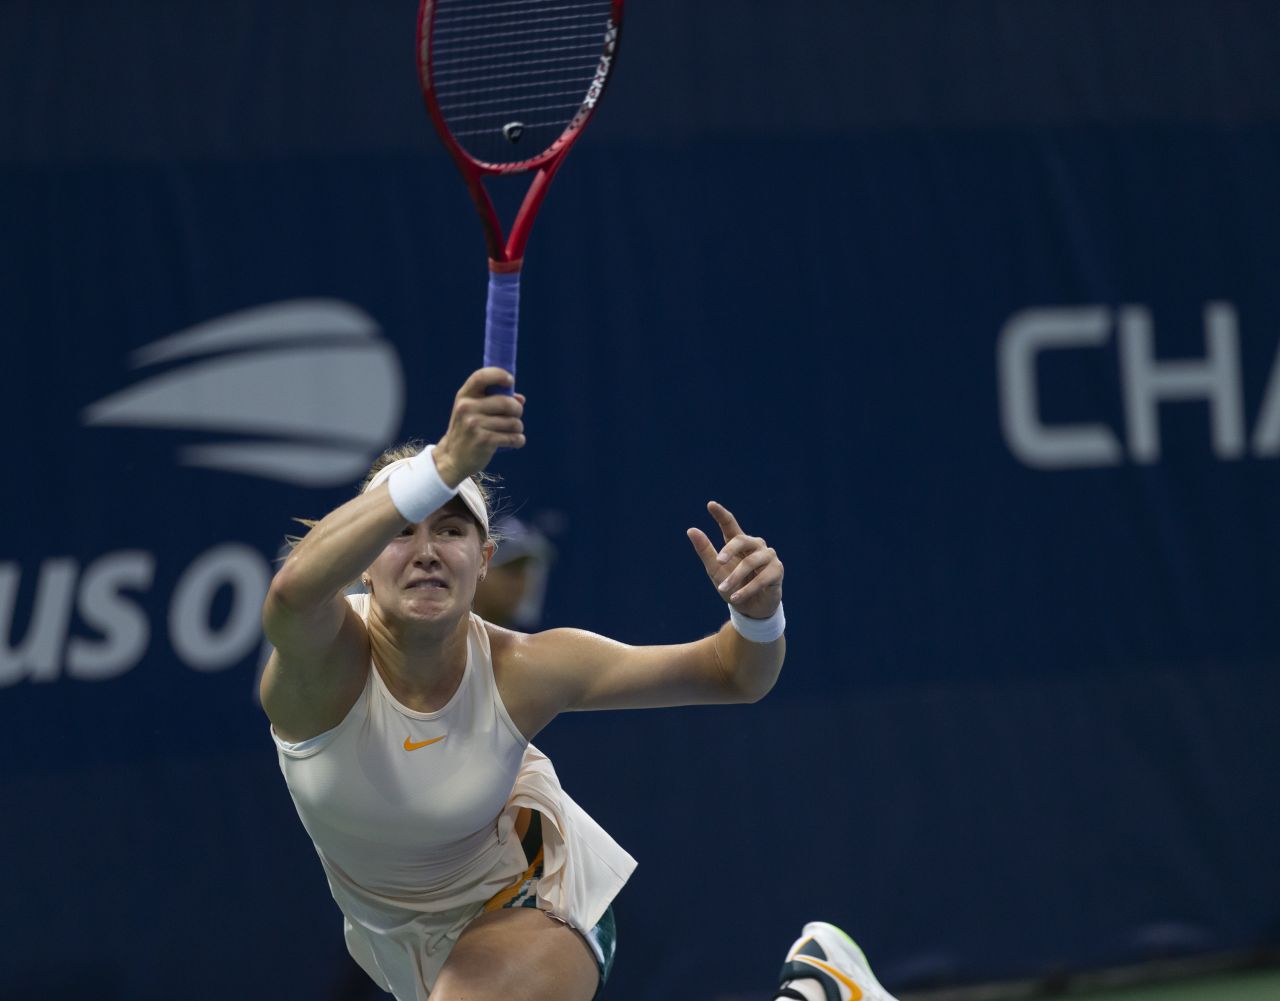 Eugenie Bouchard 2018 US Open Tennis championship in New York